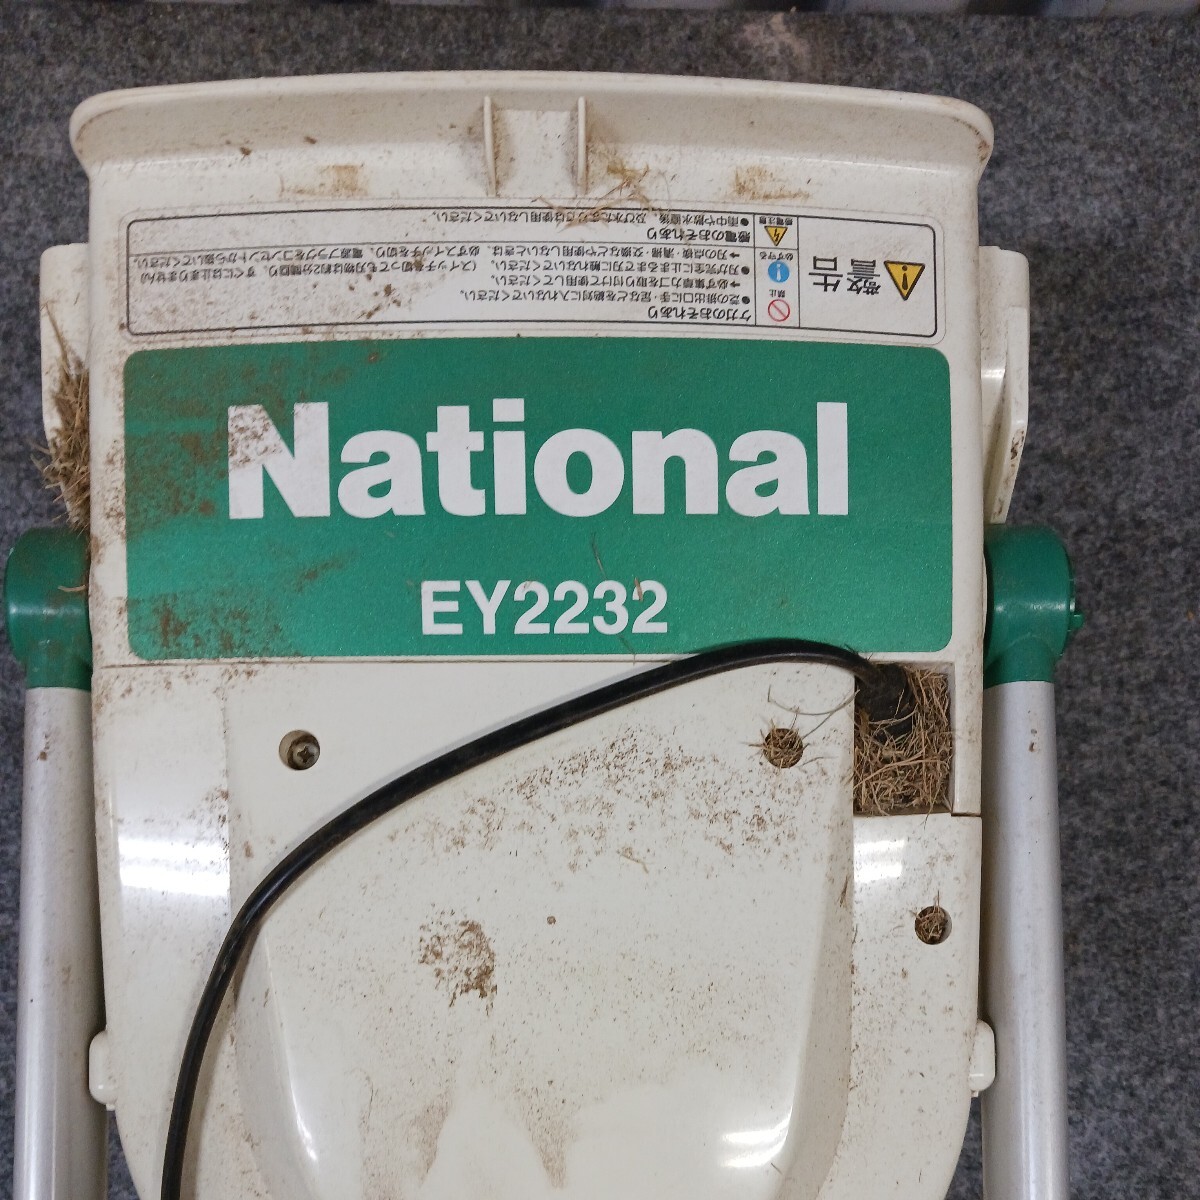 National 芝刈機 EY2232 芝刈り機 ナショナル 中古 格安売り切りスタートt_画像3